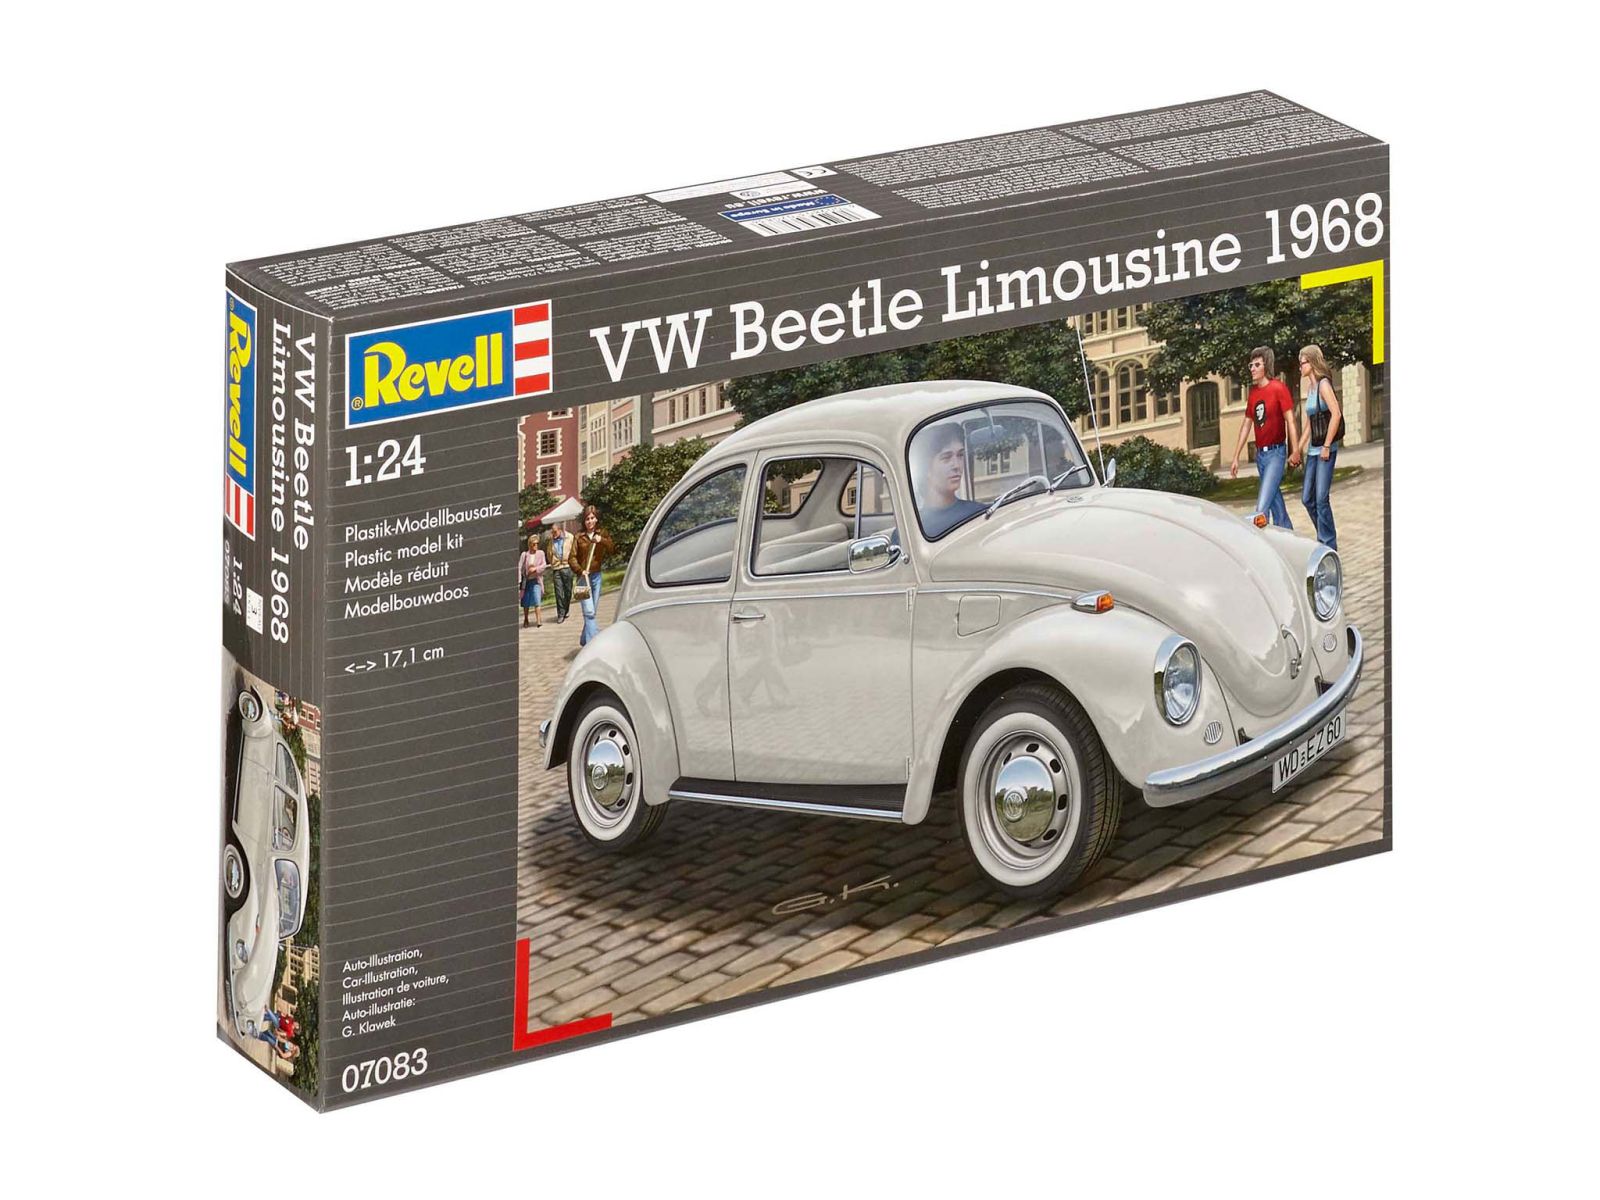 Revell 07083 - VW Beetle Limousine 1968